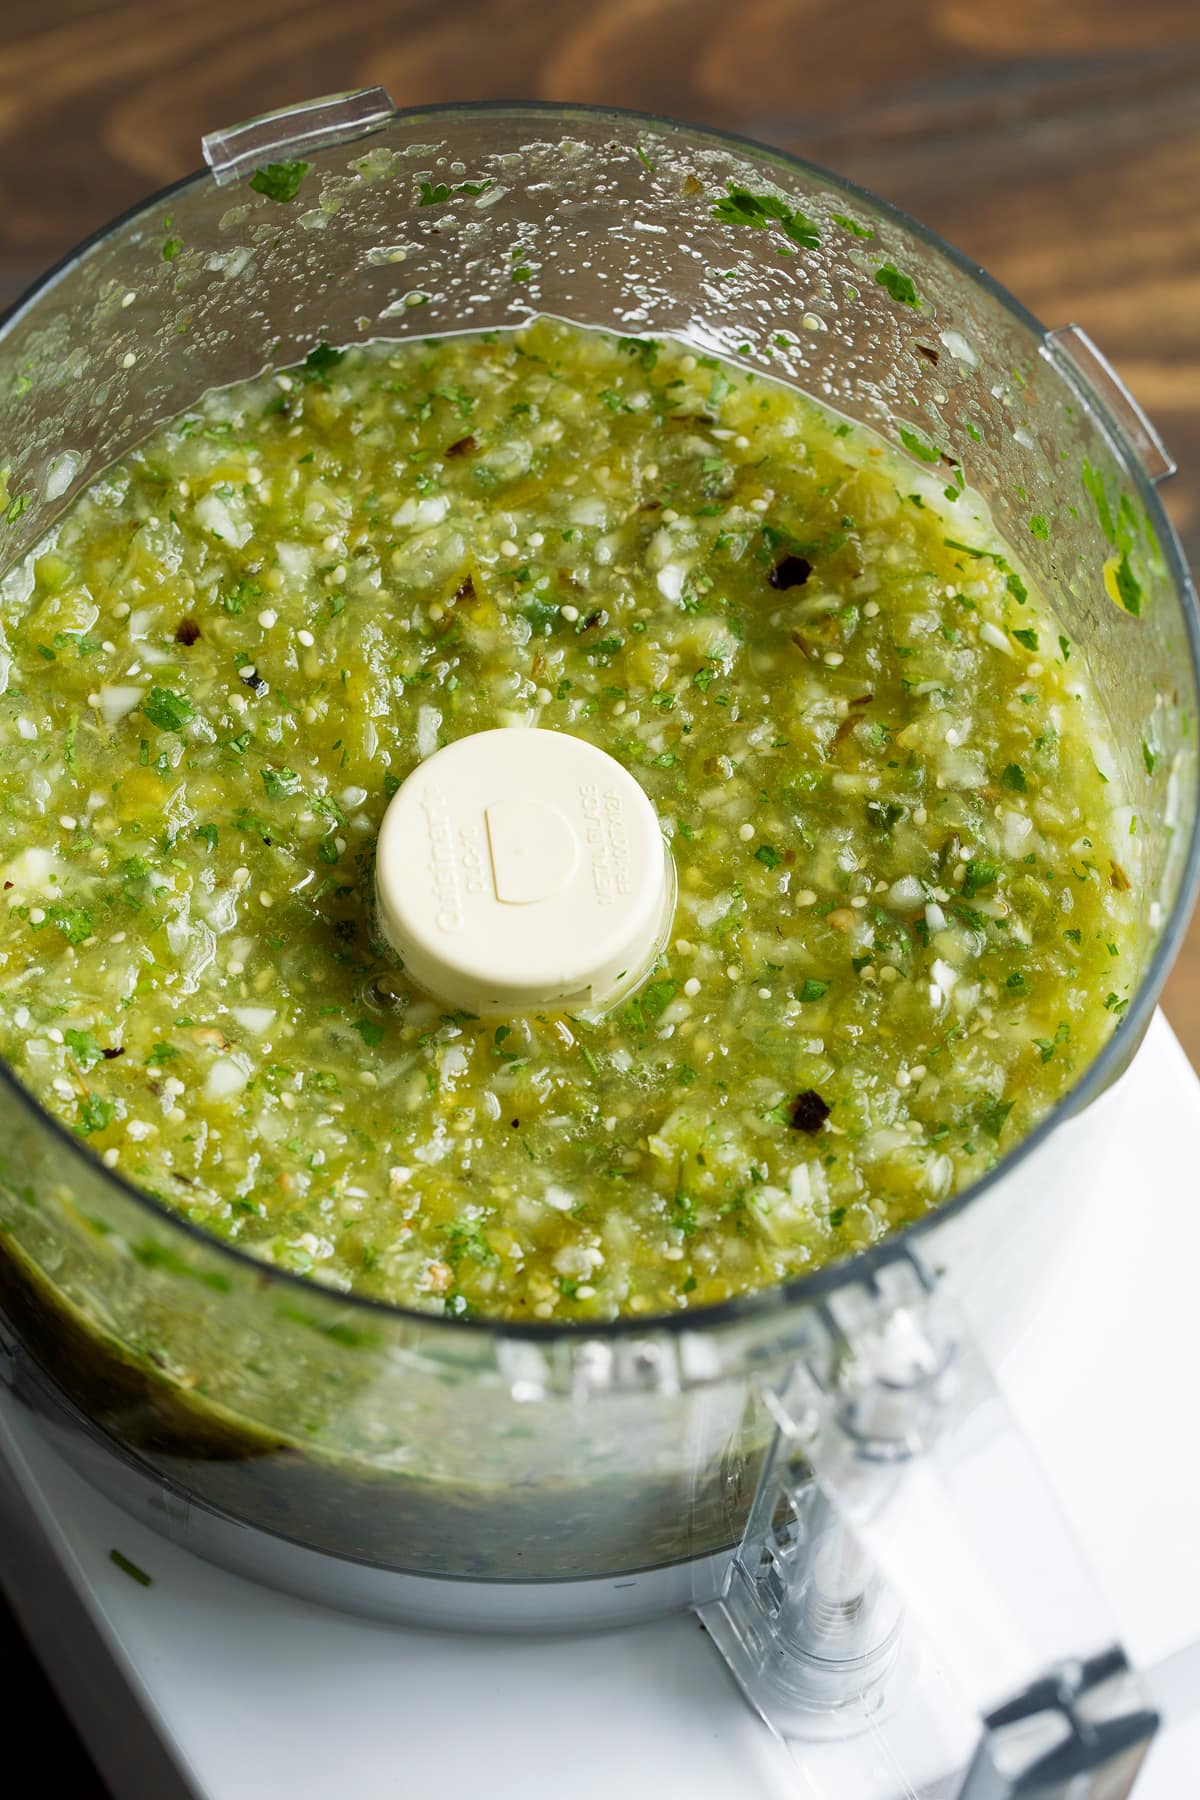 Chopped up salsa verde in a food processor.